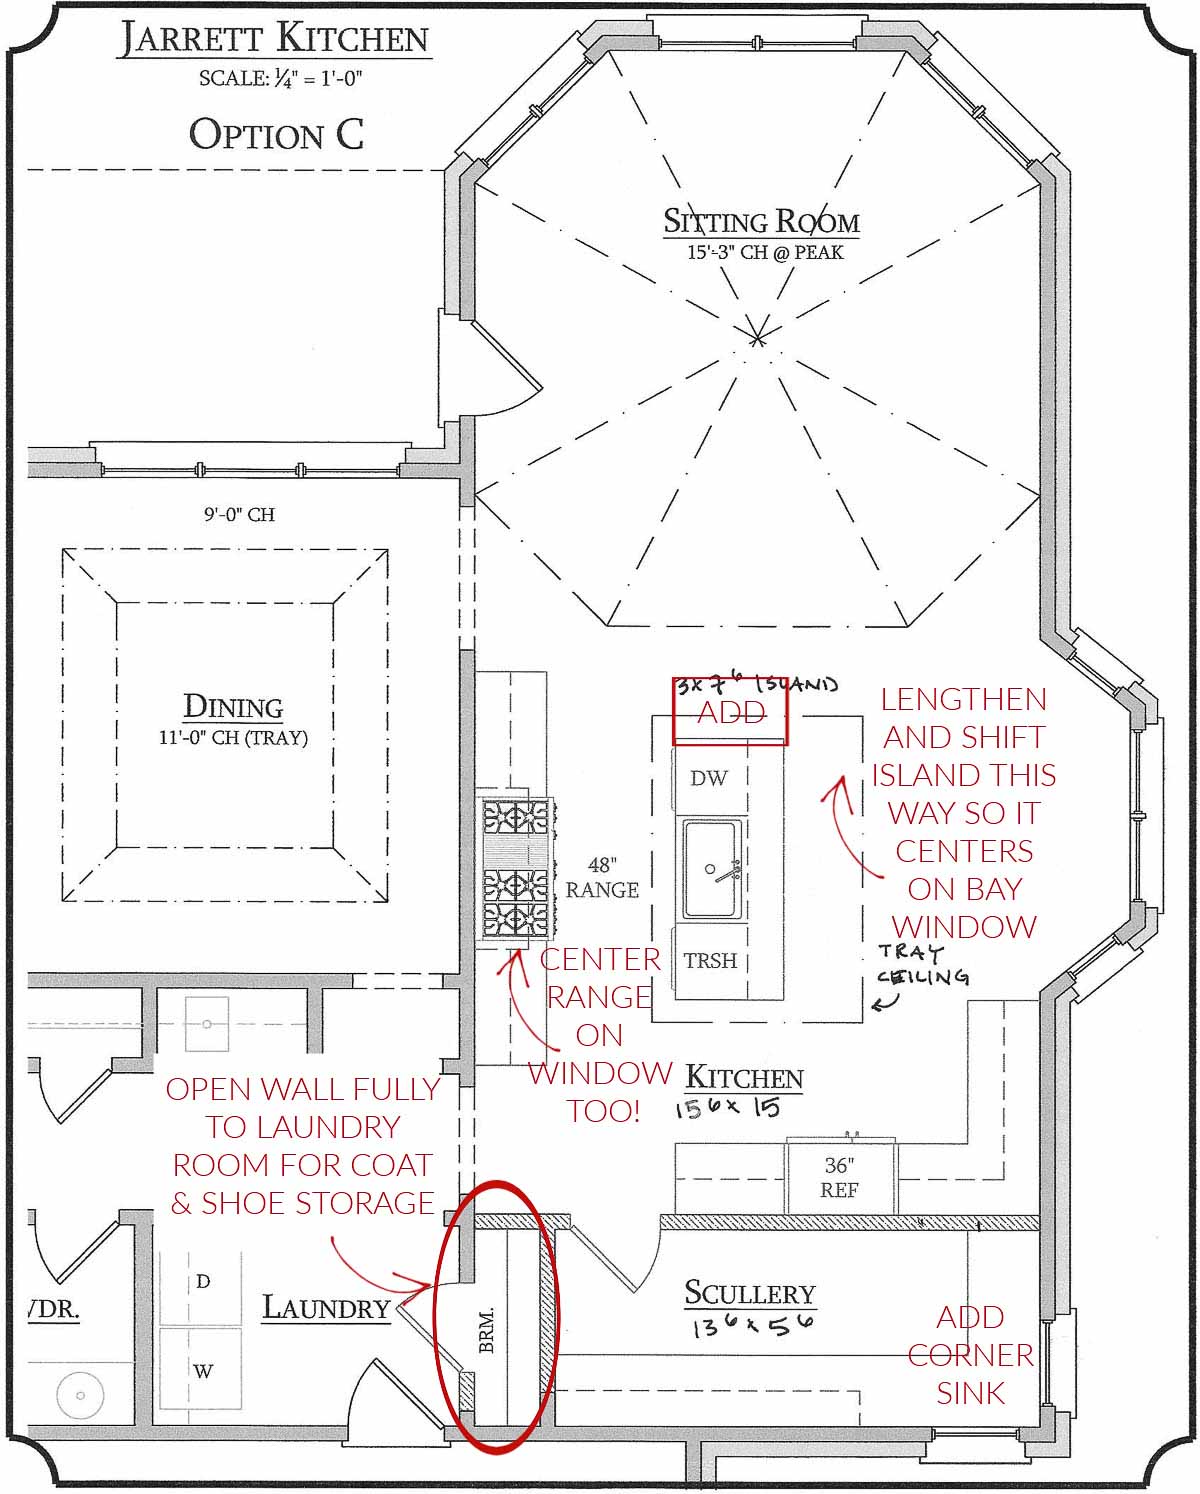 Possible kitchen layout plans